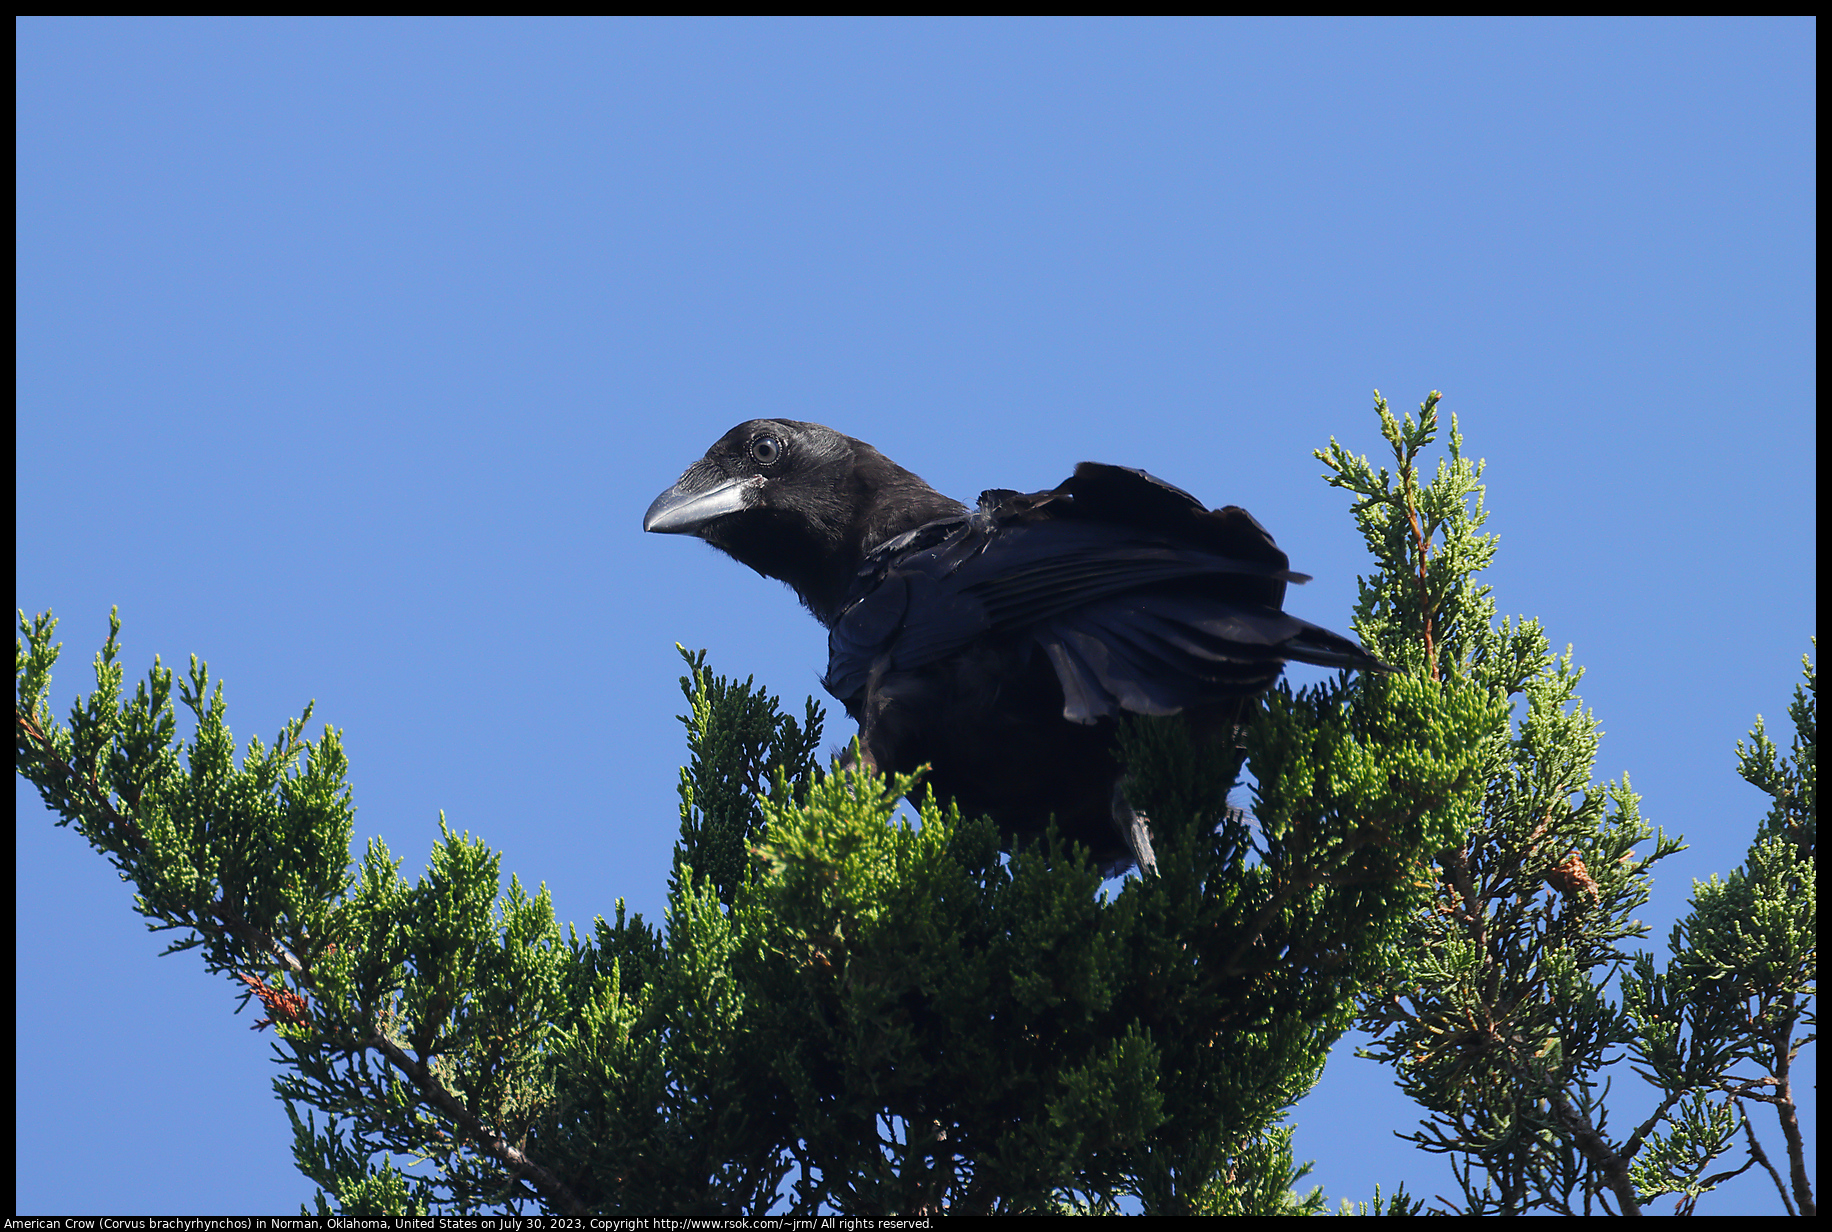 American Crow (Corvus brachyrhynchos) in Norman, Oklahoma, United States on July 30, 2023